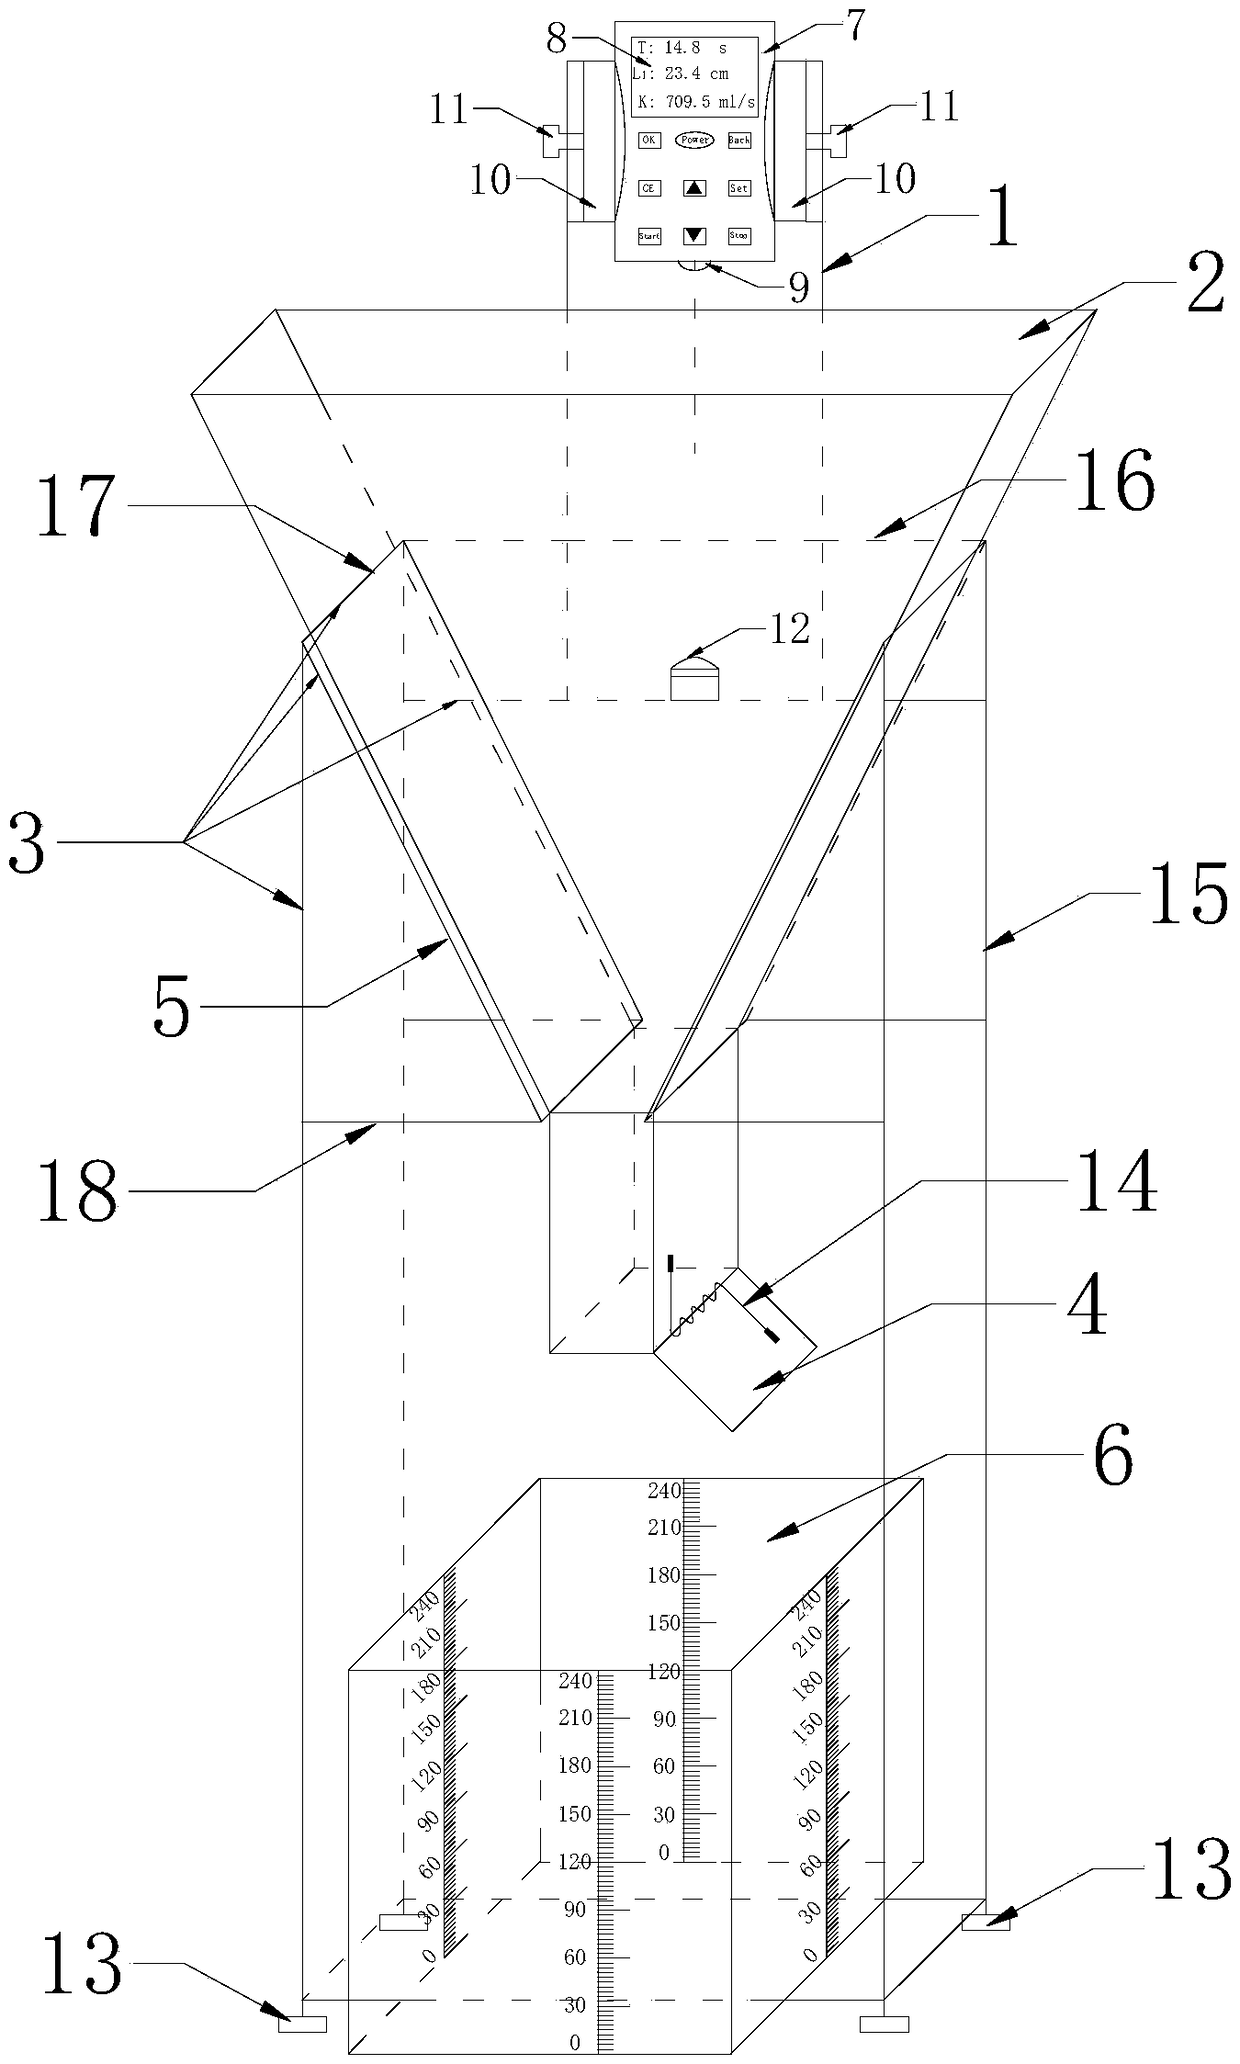 V-shaped funnel device for measuring concrete flowability